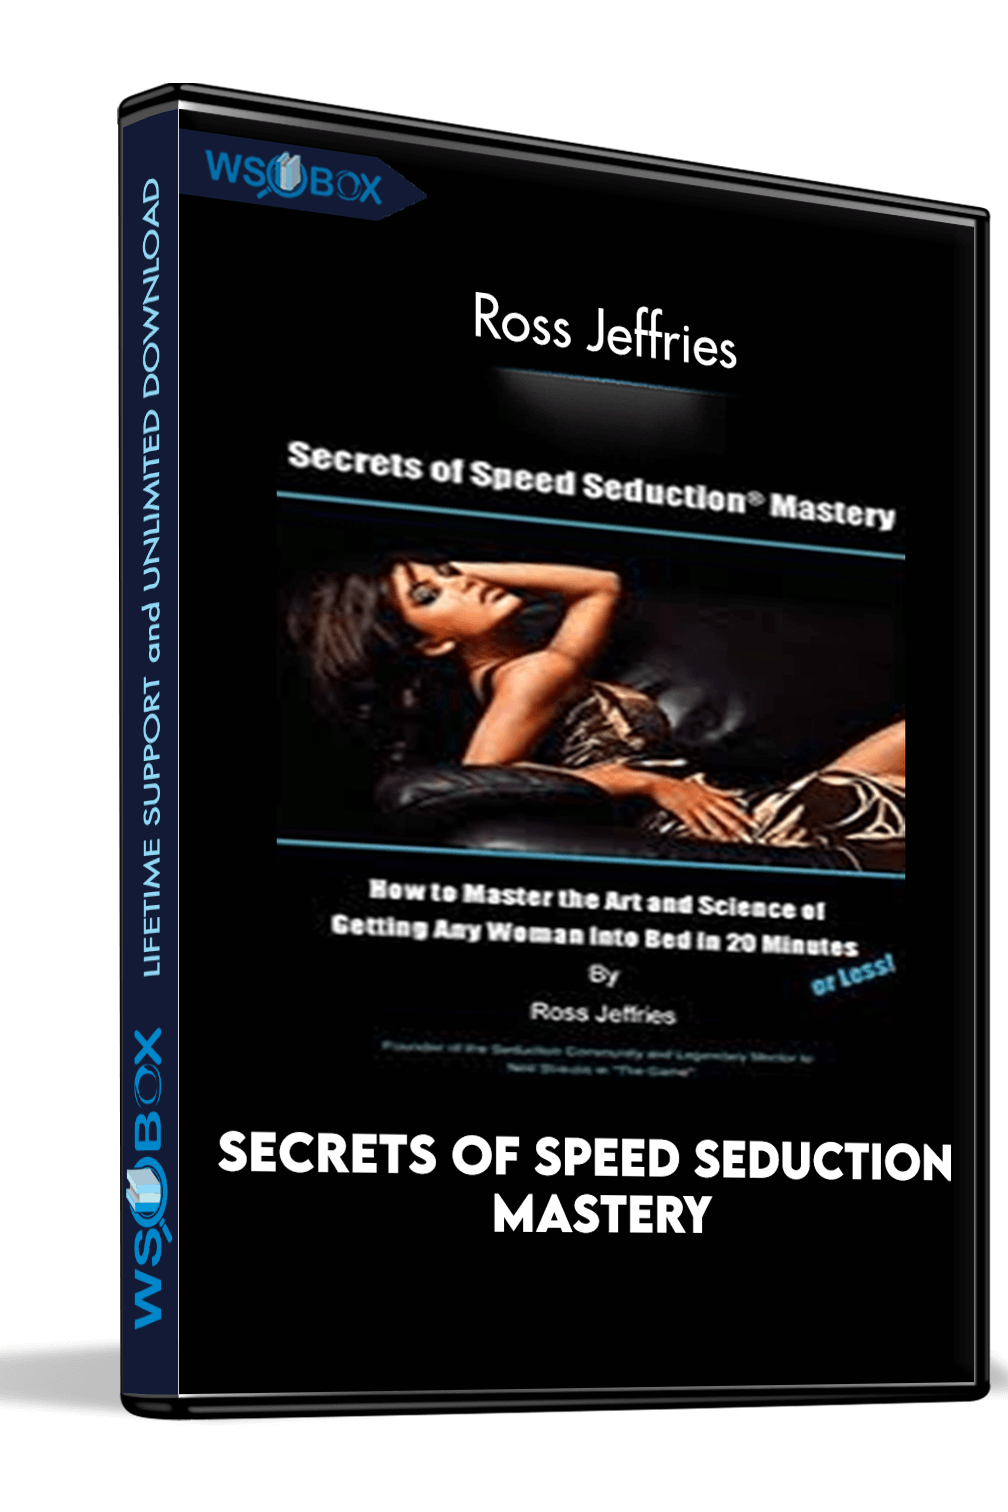 secrets-of-speed-seduction-mastery-ross-jeffries